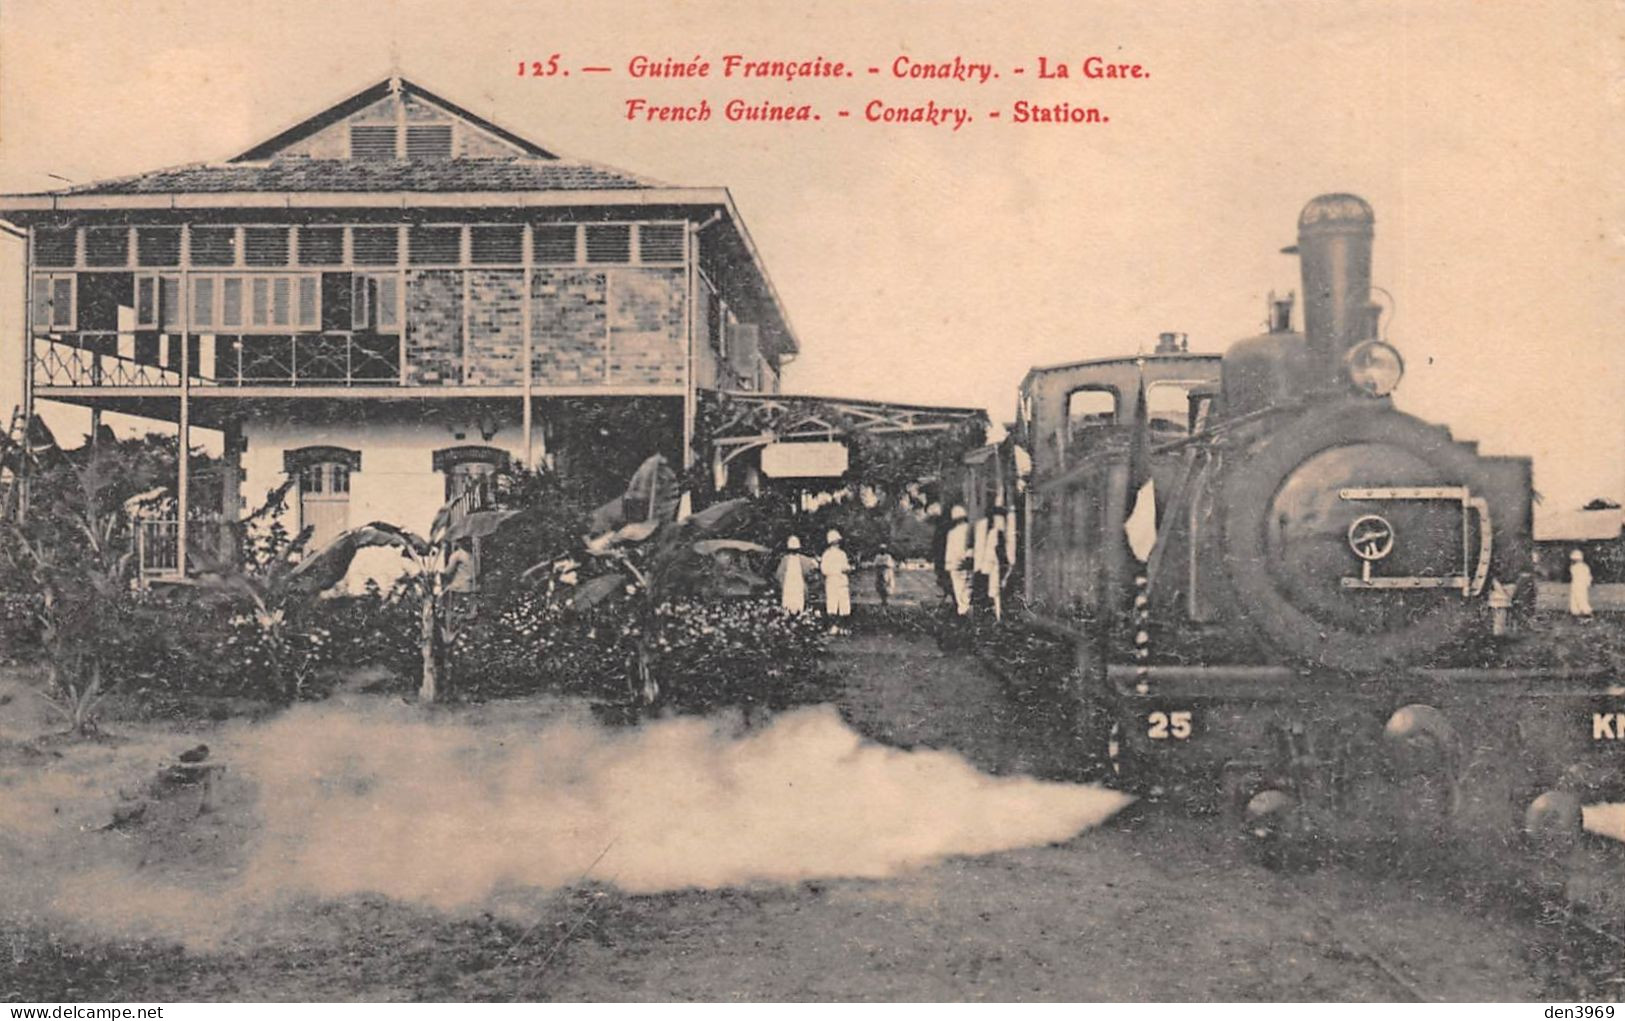 Afrique - Guinée Française - CONAKRY - La Gare - Train (Gros Plan) - French Guinea - Station - French Guinea